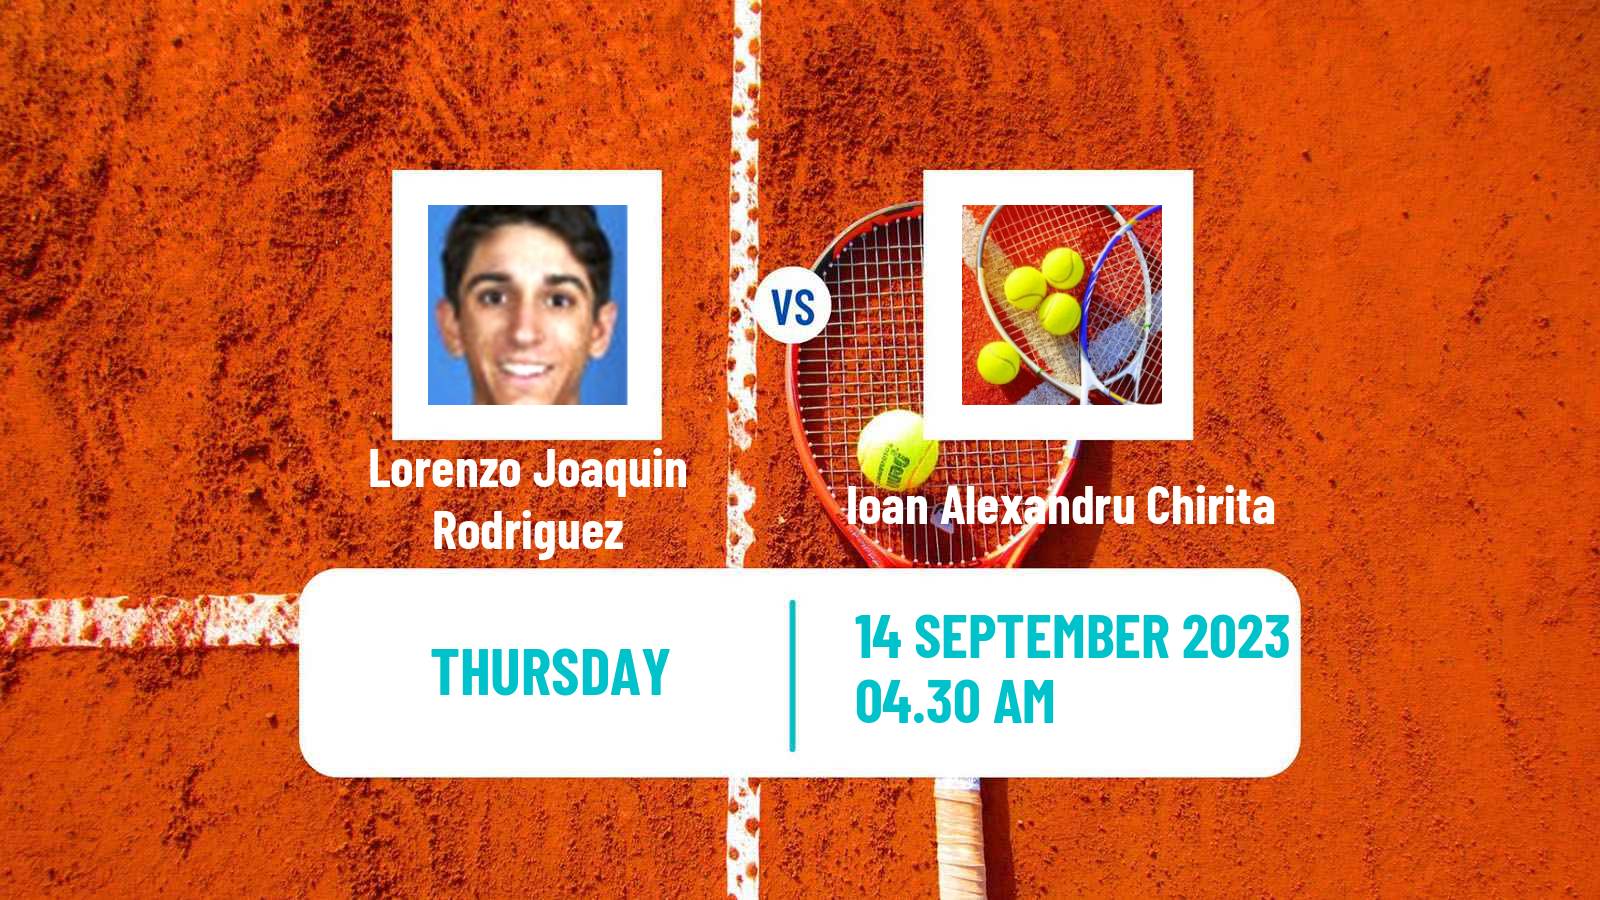 Tennis ITF M15 Satu Mare Men Lorenzo Joaquin Rodriguez - Ioan Alexandru Chirita